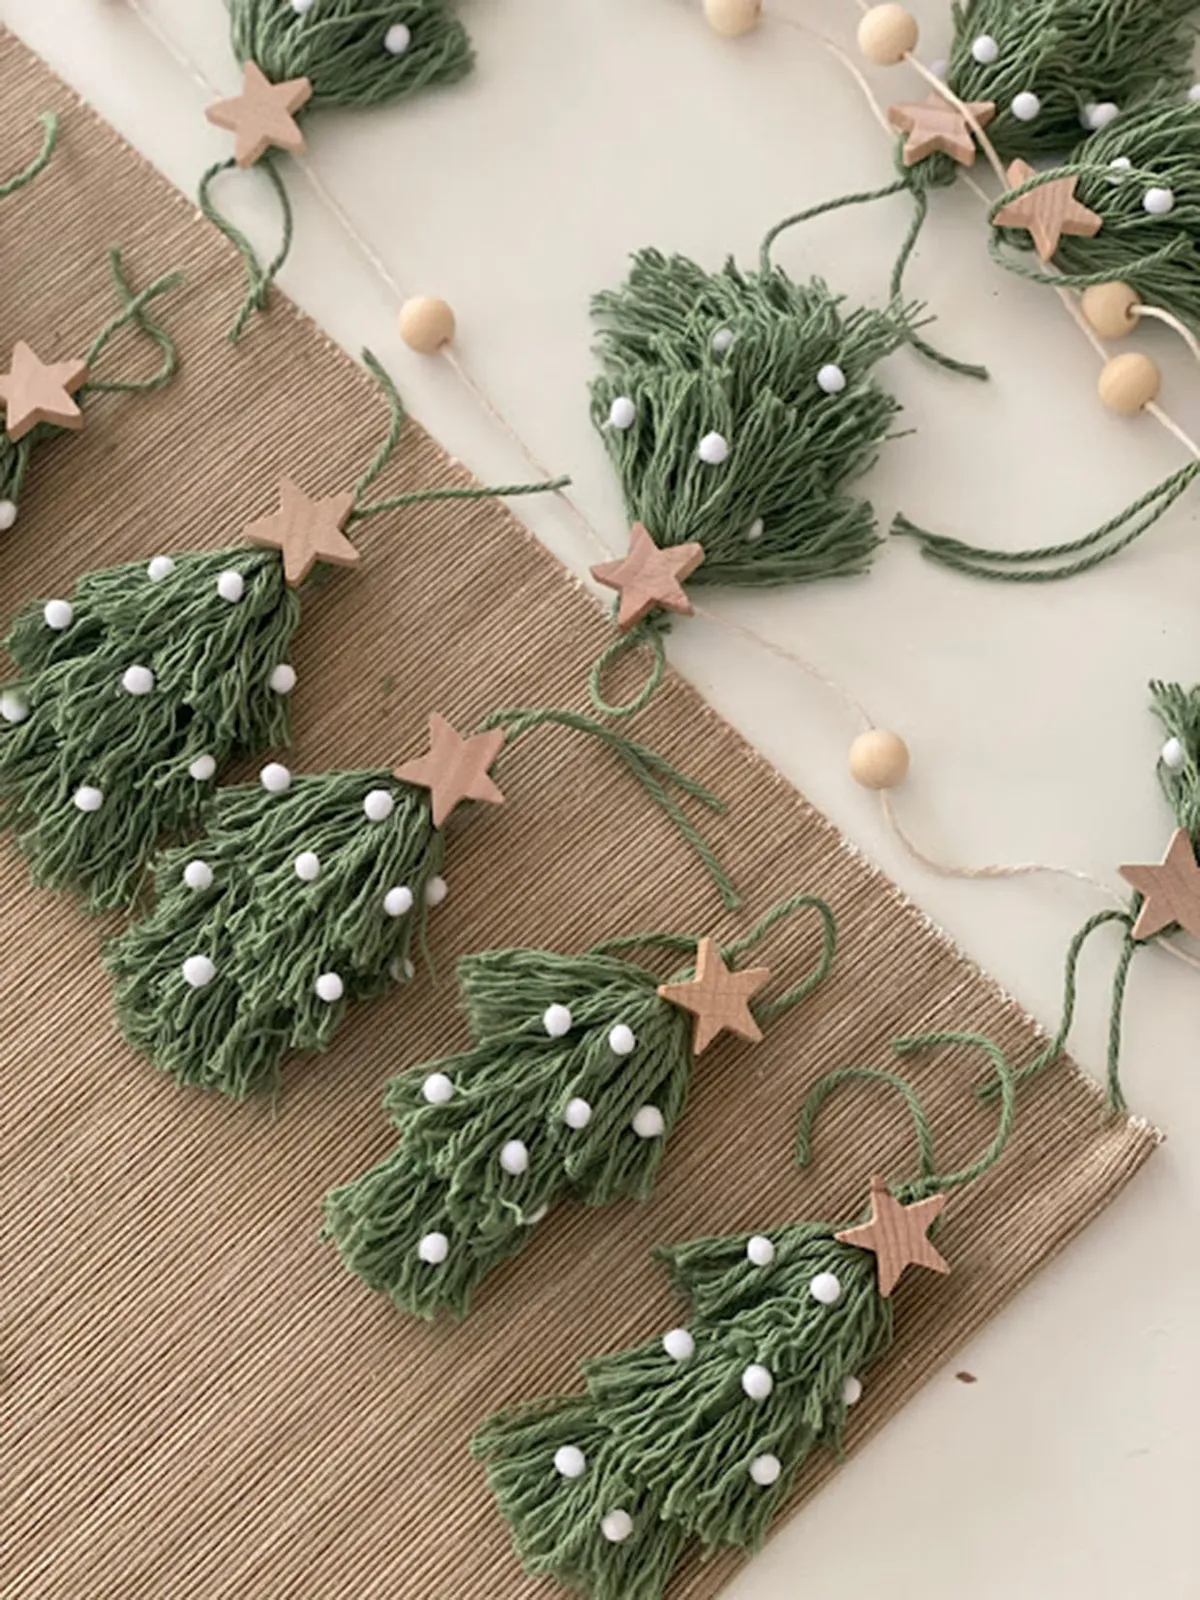 DIY Christmas tree tassels